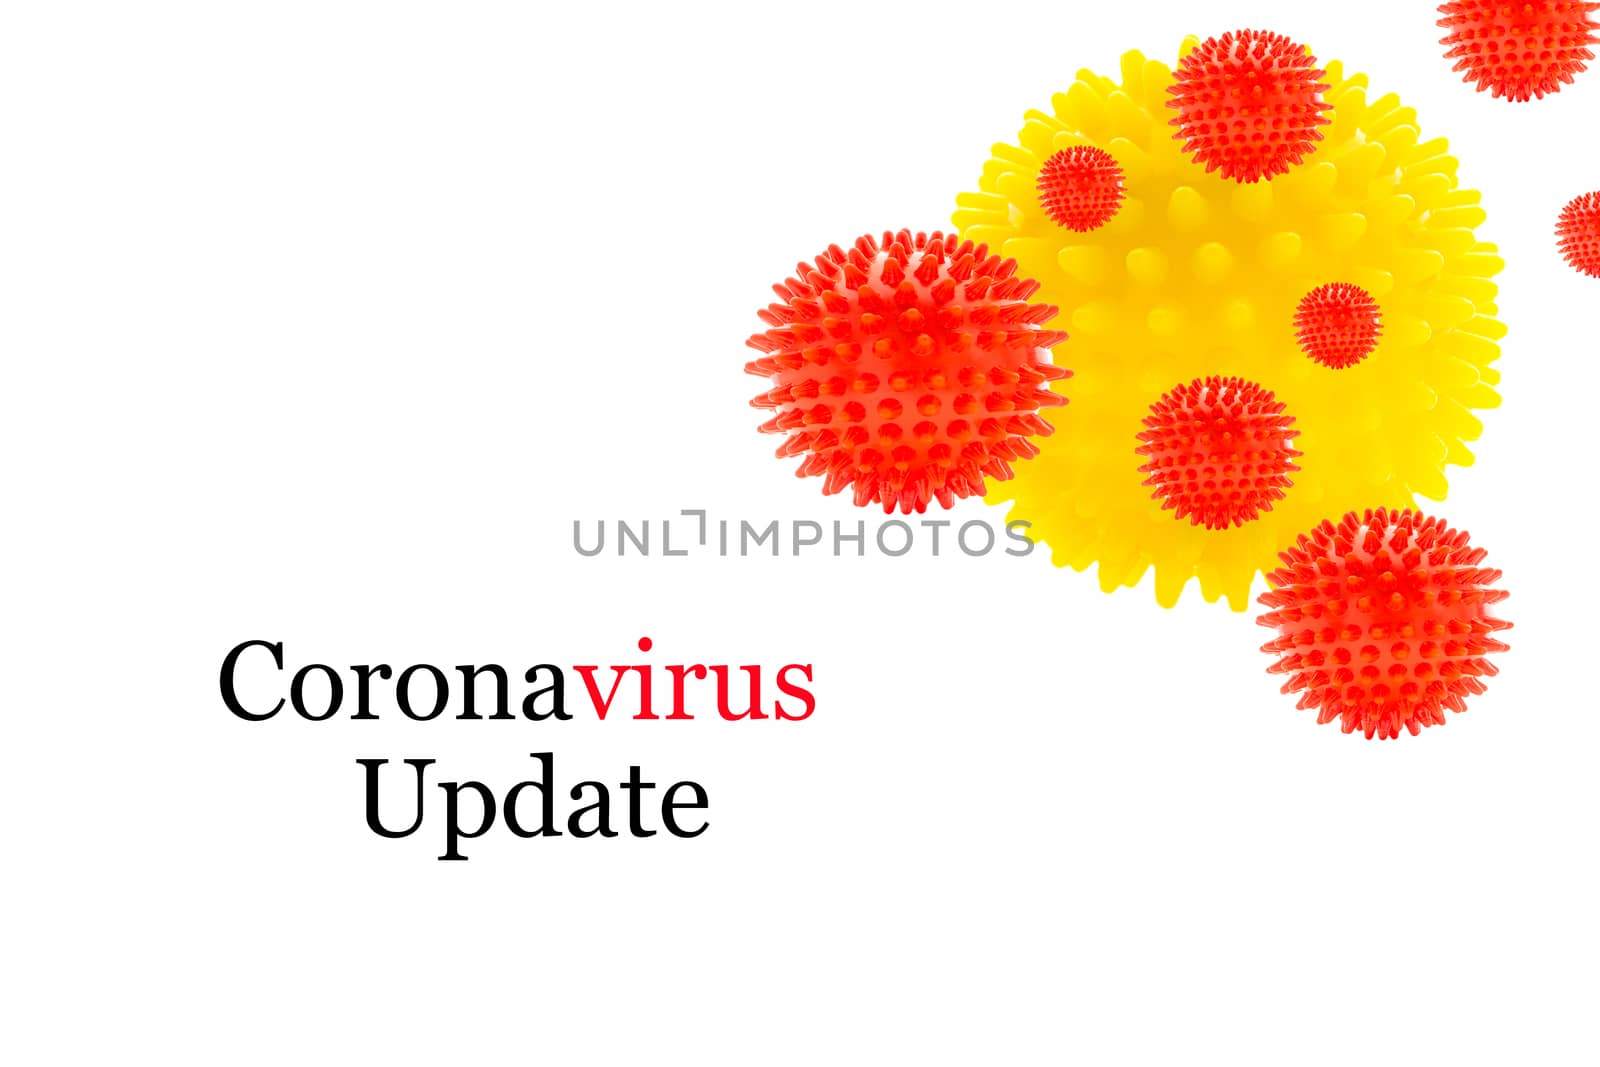 CORONAVIRUS UPDATE text on white background. Covid-19 or Coronavirus by silverwings